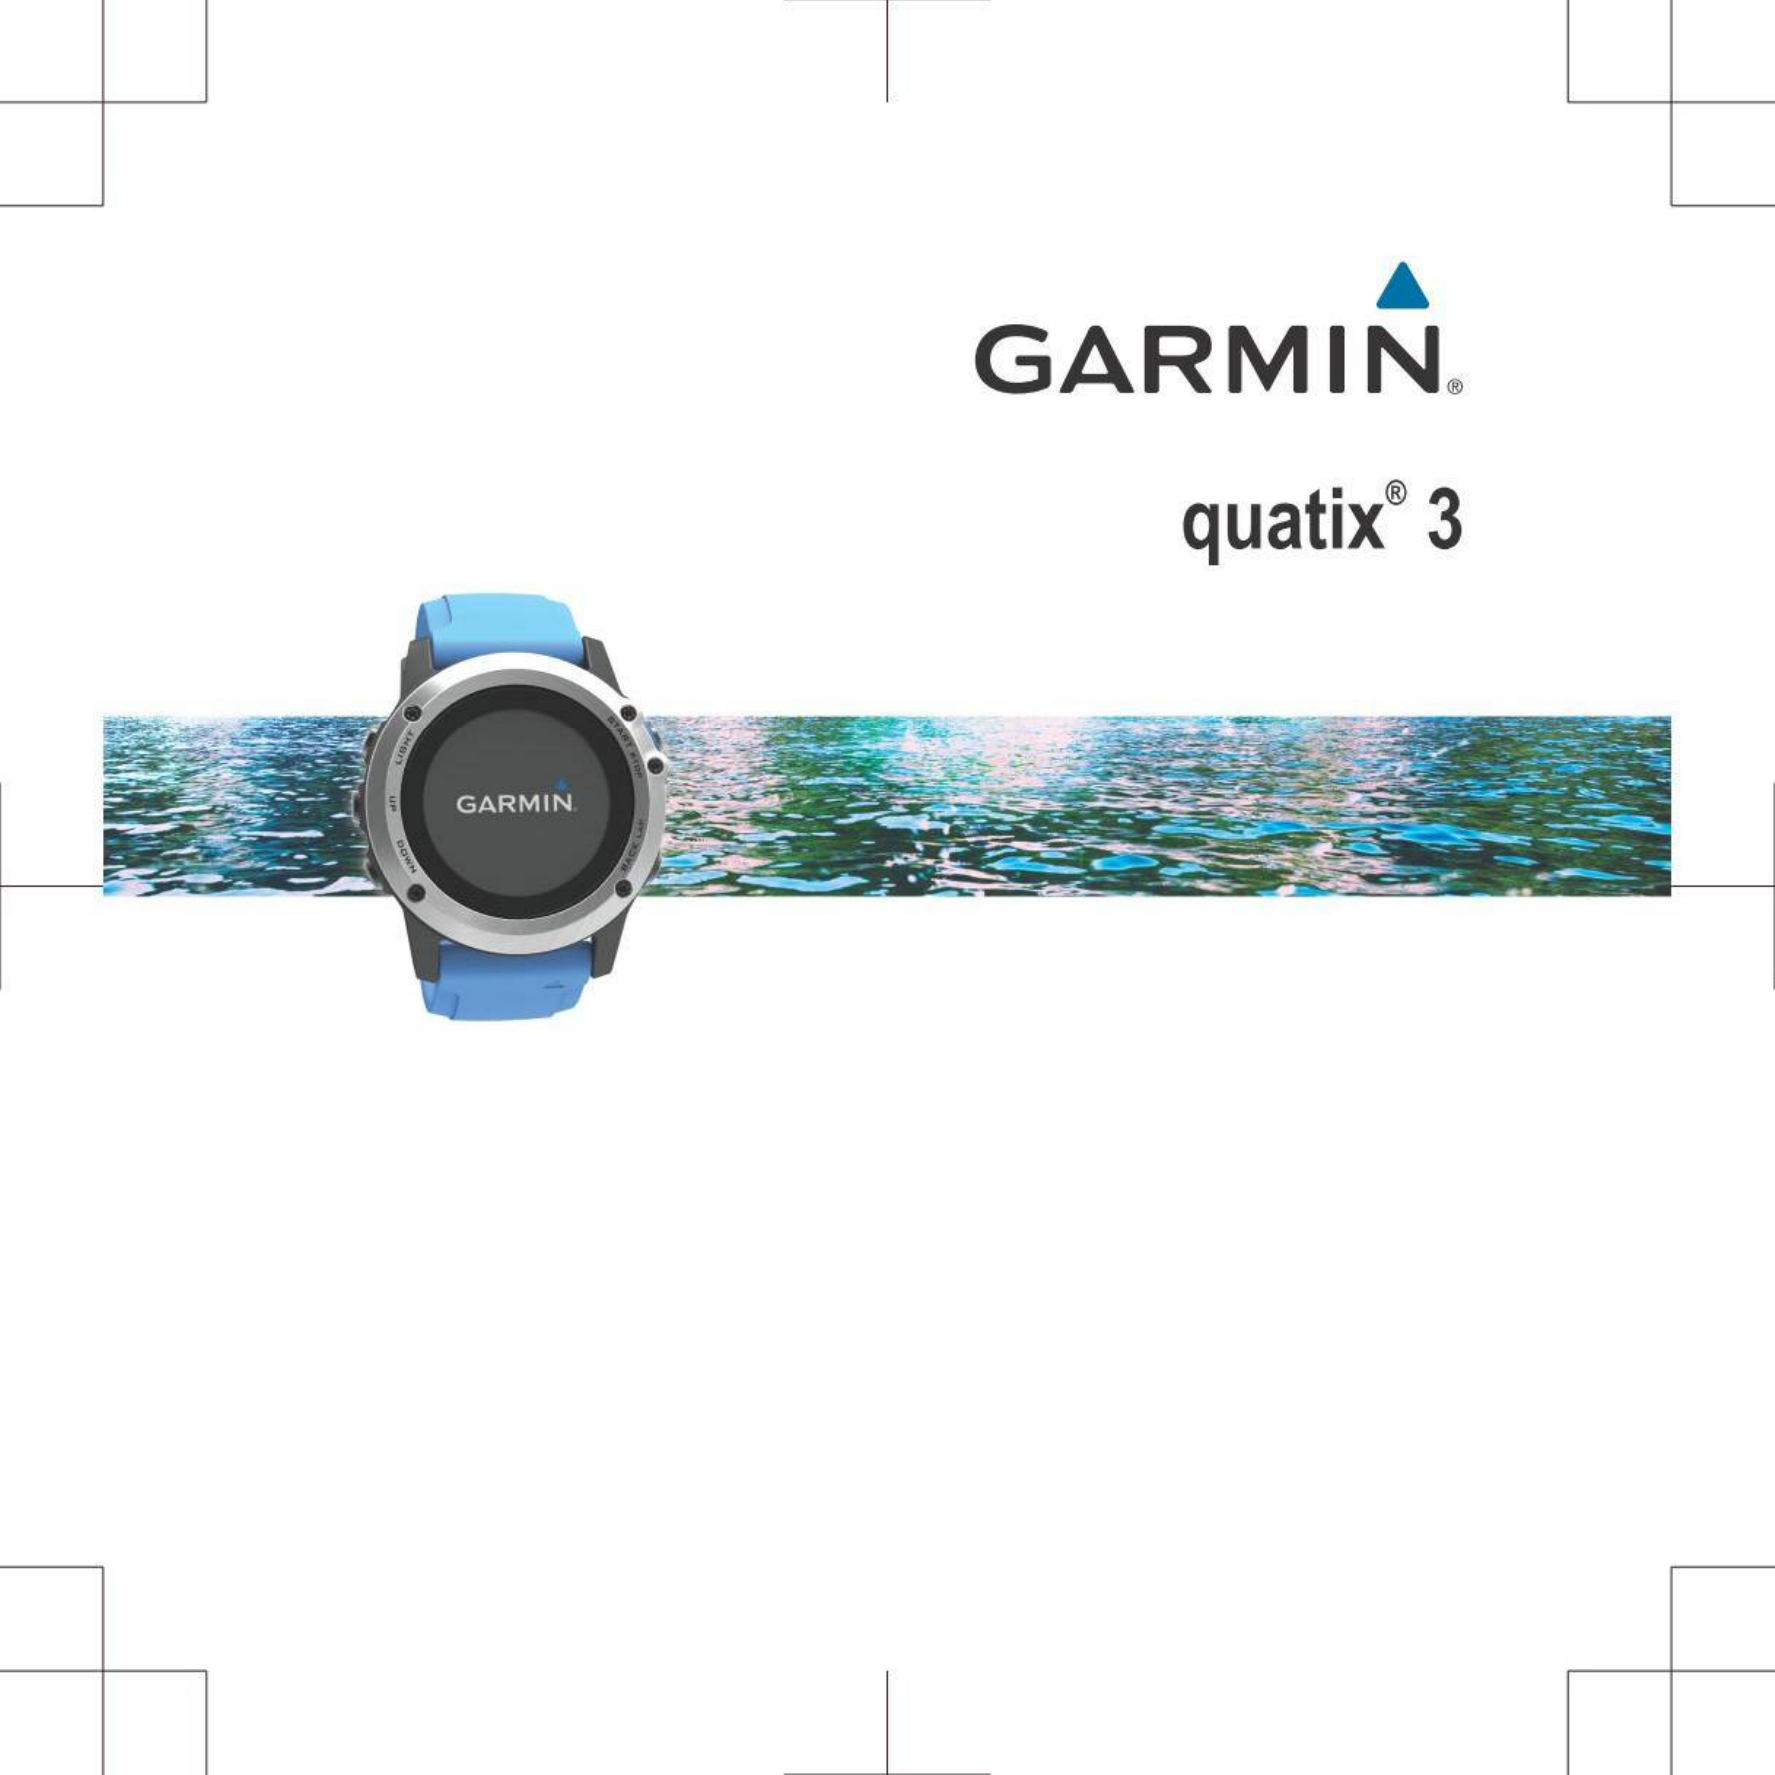 GARMIN GPS导航设备-quatix 3说明书.pdf